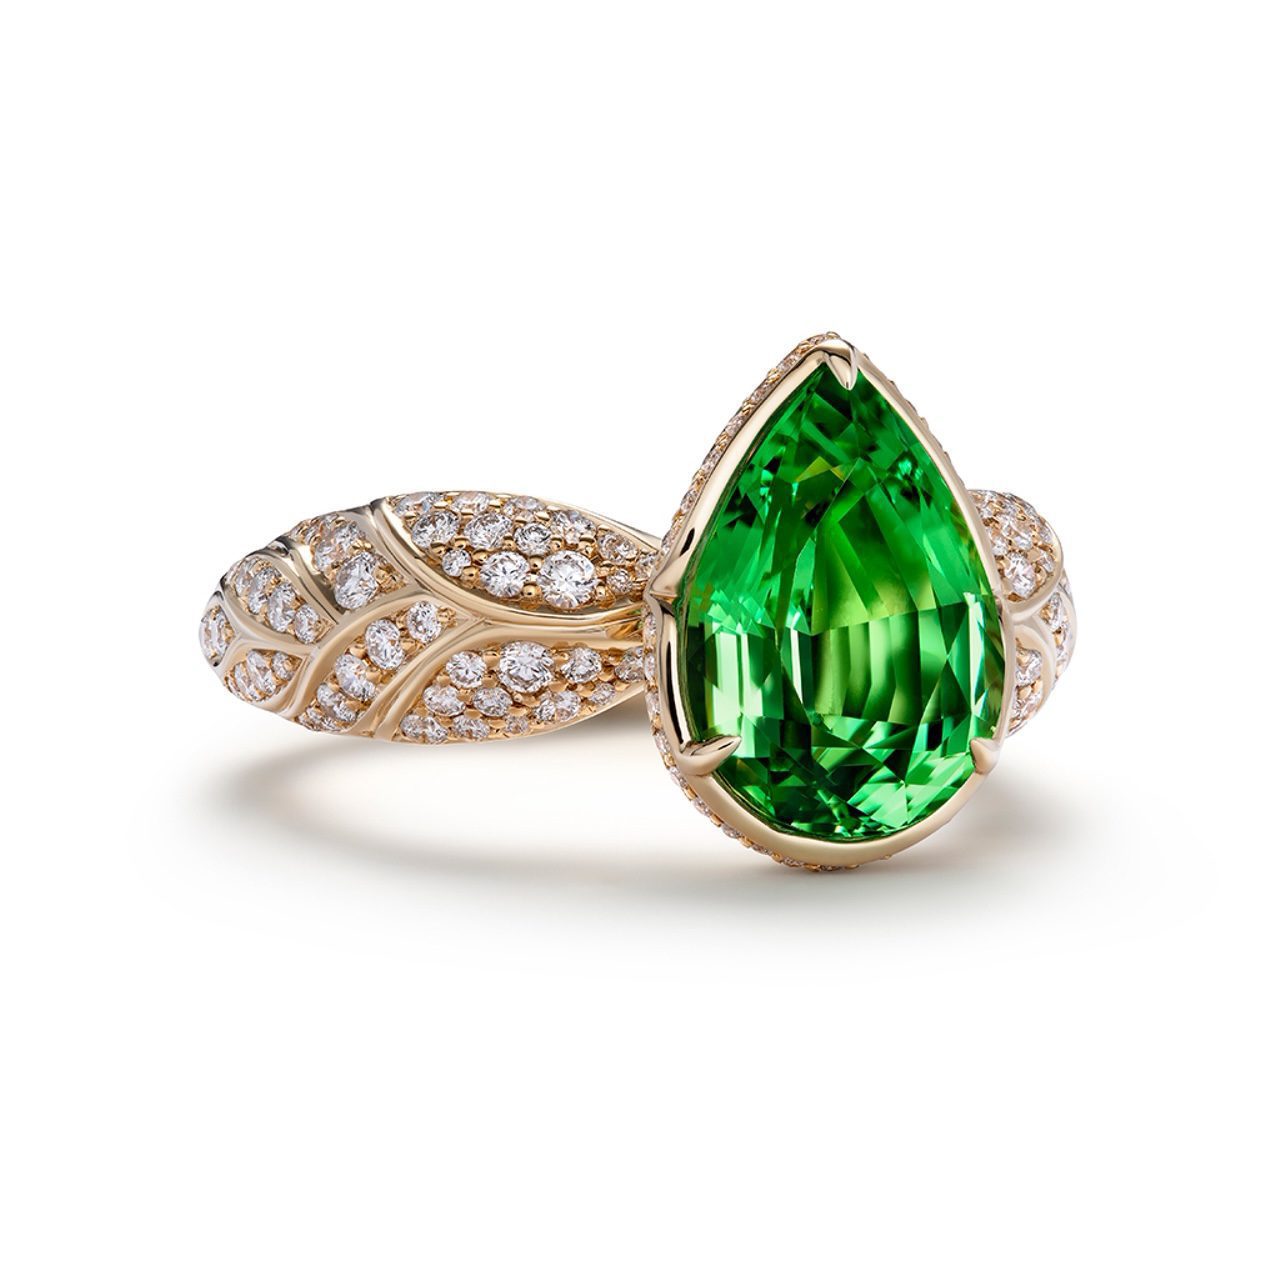 Green Garnet gemstone necklace green natural gemstone Grossular Garnet necklace Nature art jewelry